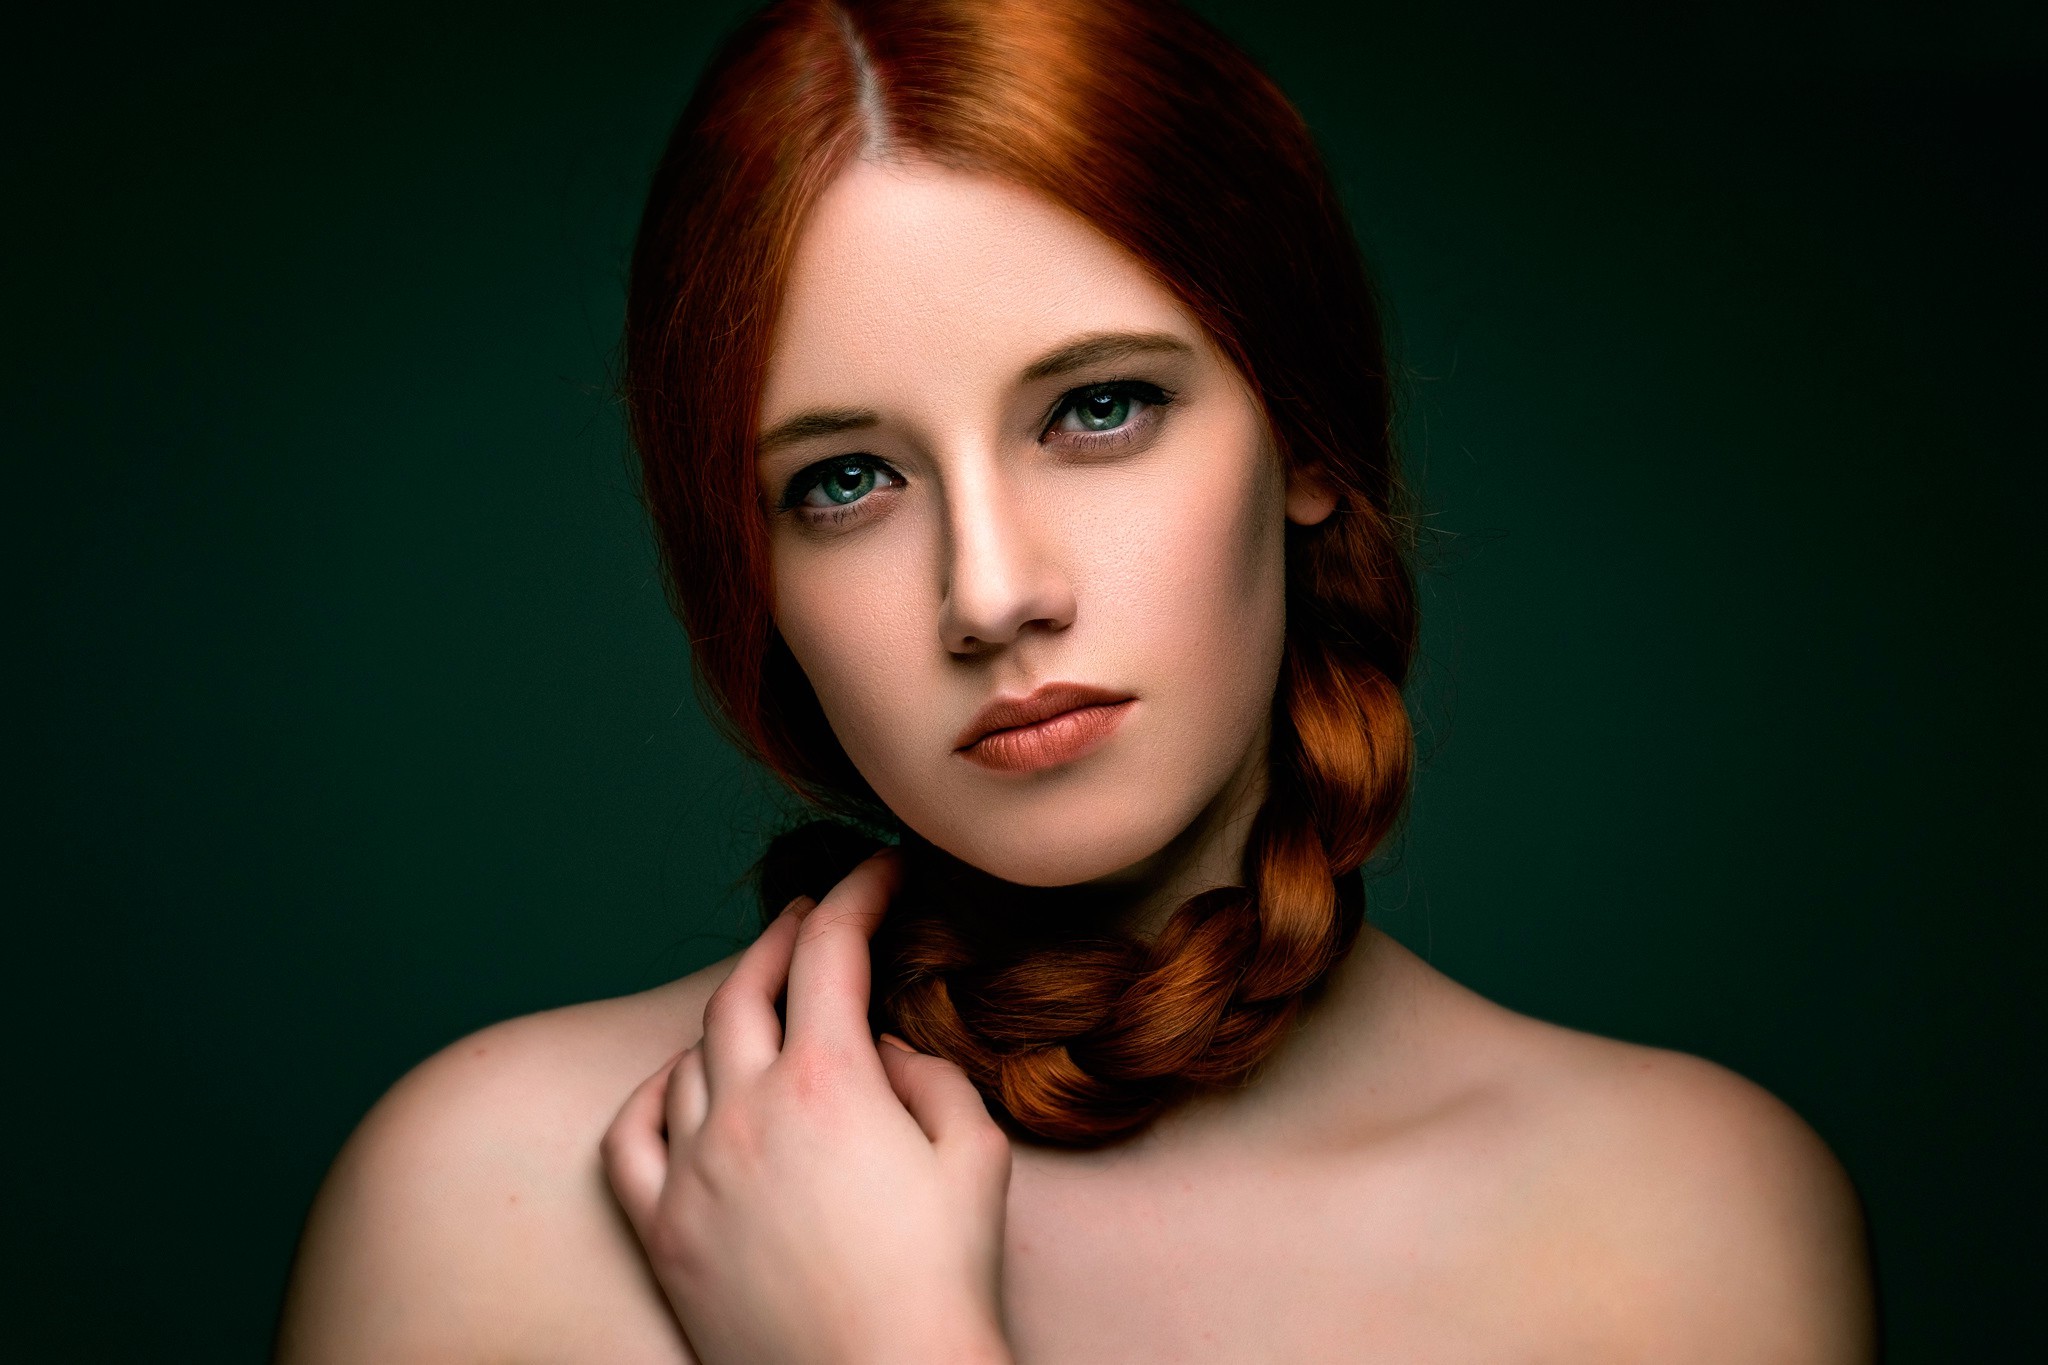 Face Redhead Women Model Portrait Wallpapers HD Desktop And Mobile Backgrounds